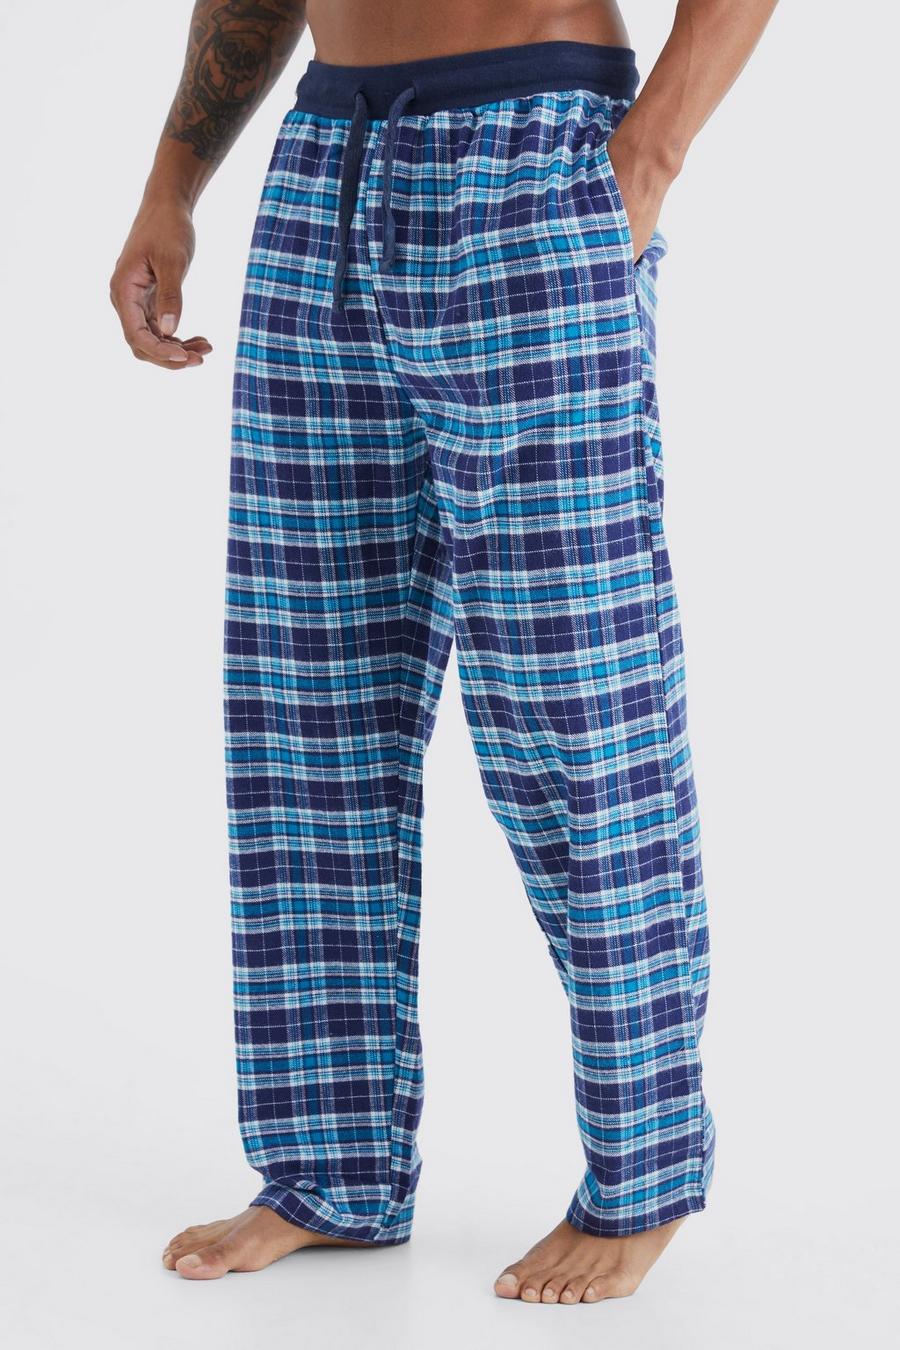 Blue Check Pyjama Bottoms